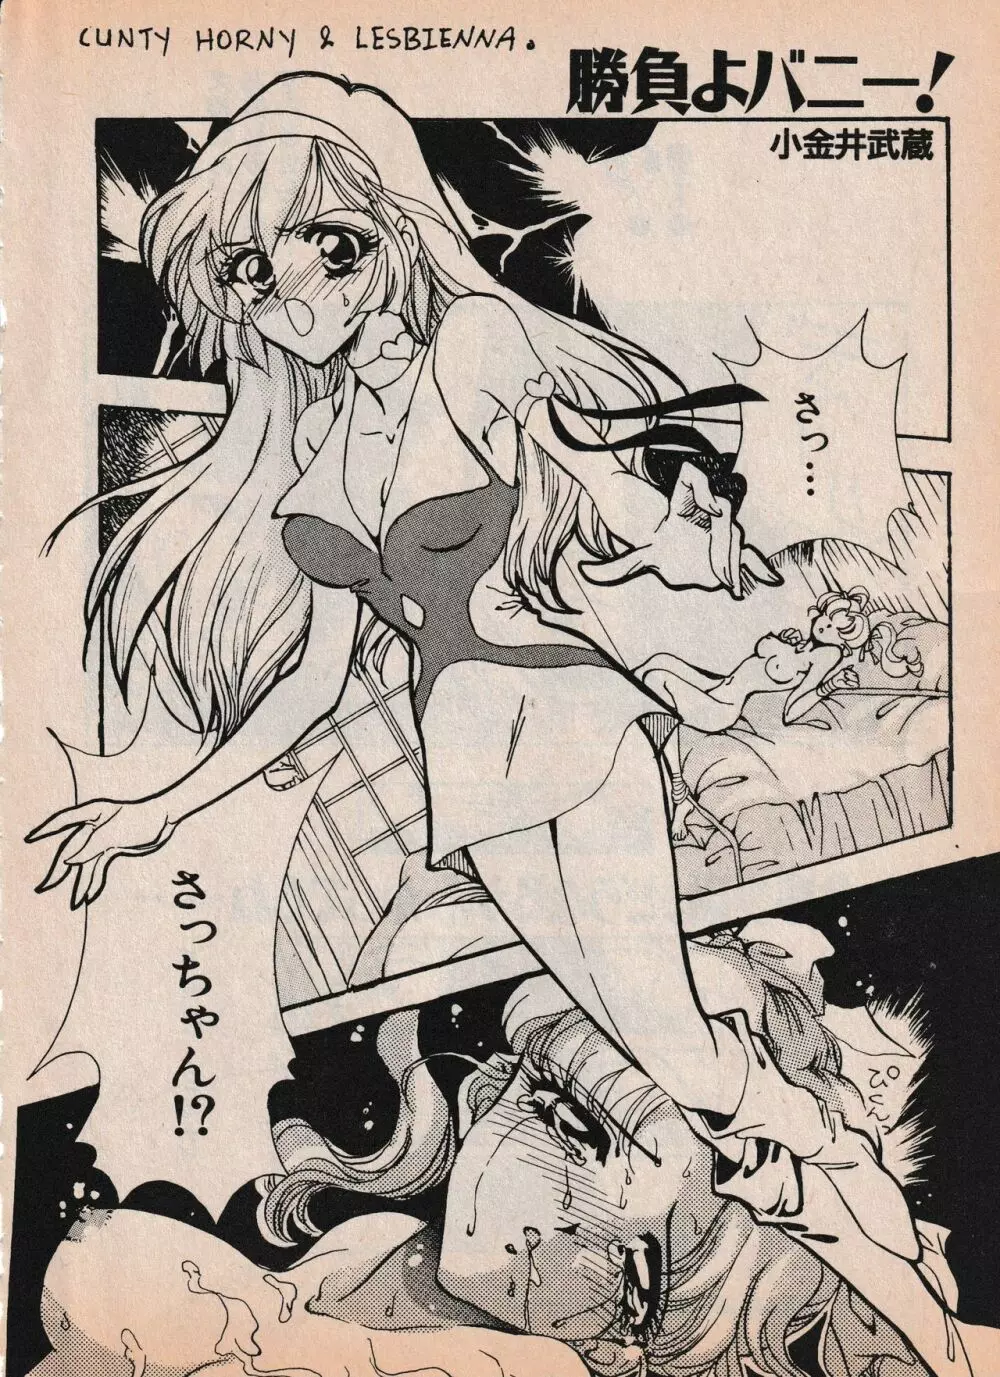 Sailor X vol. 4 - Sailor X vs. Cunty Horny! - page97